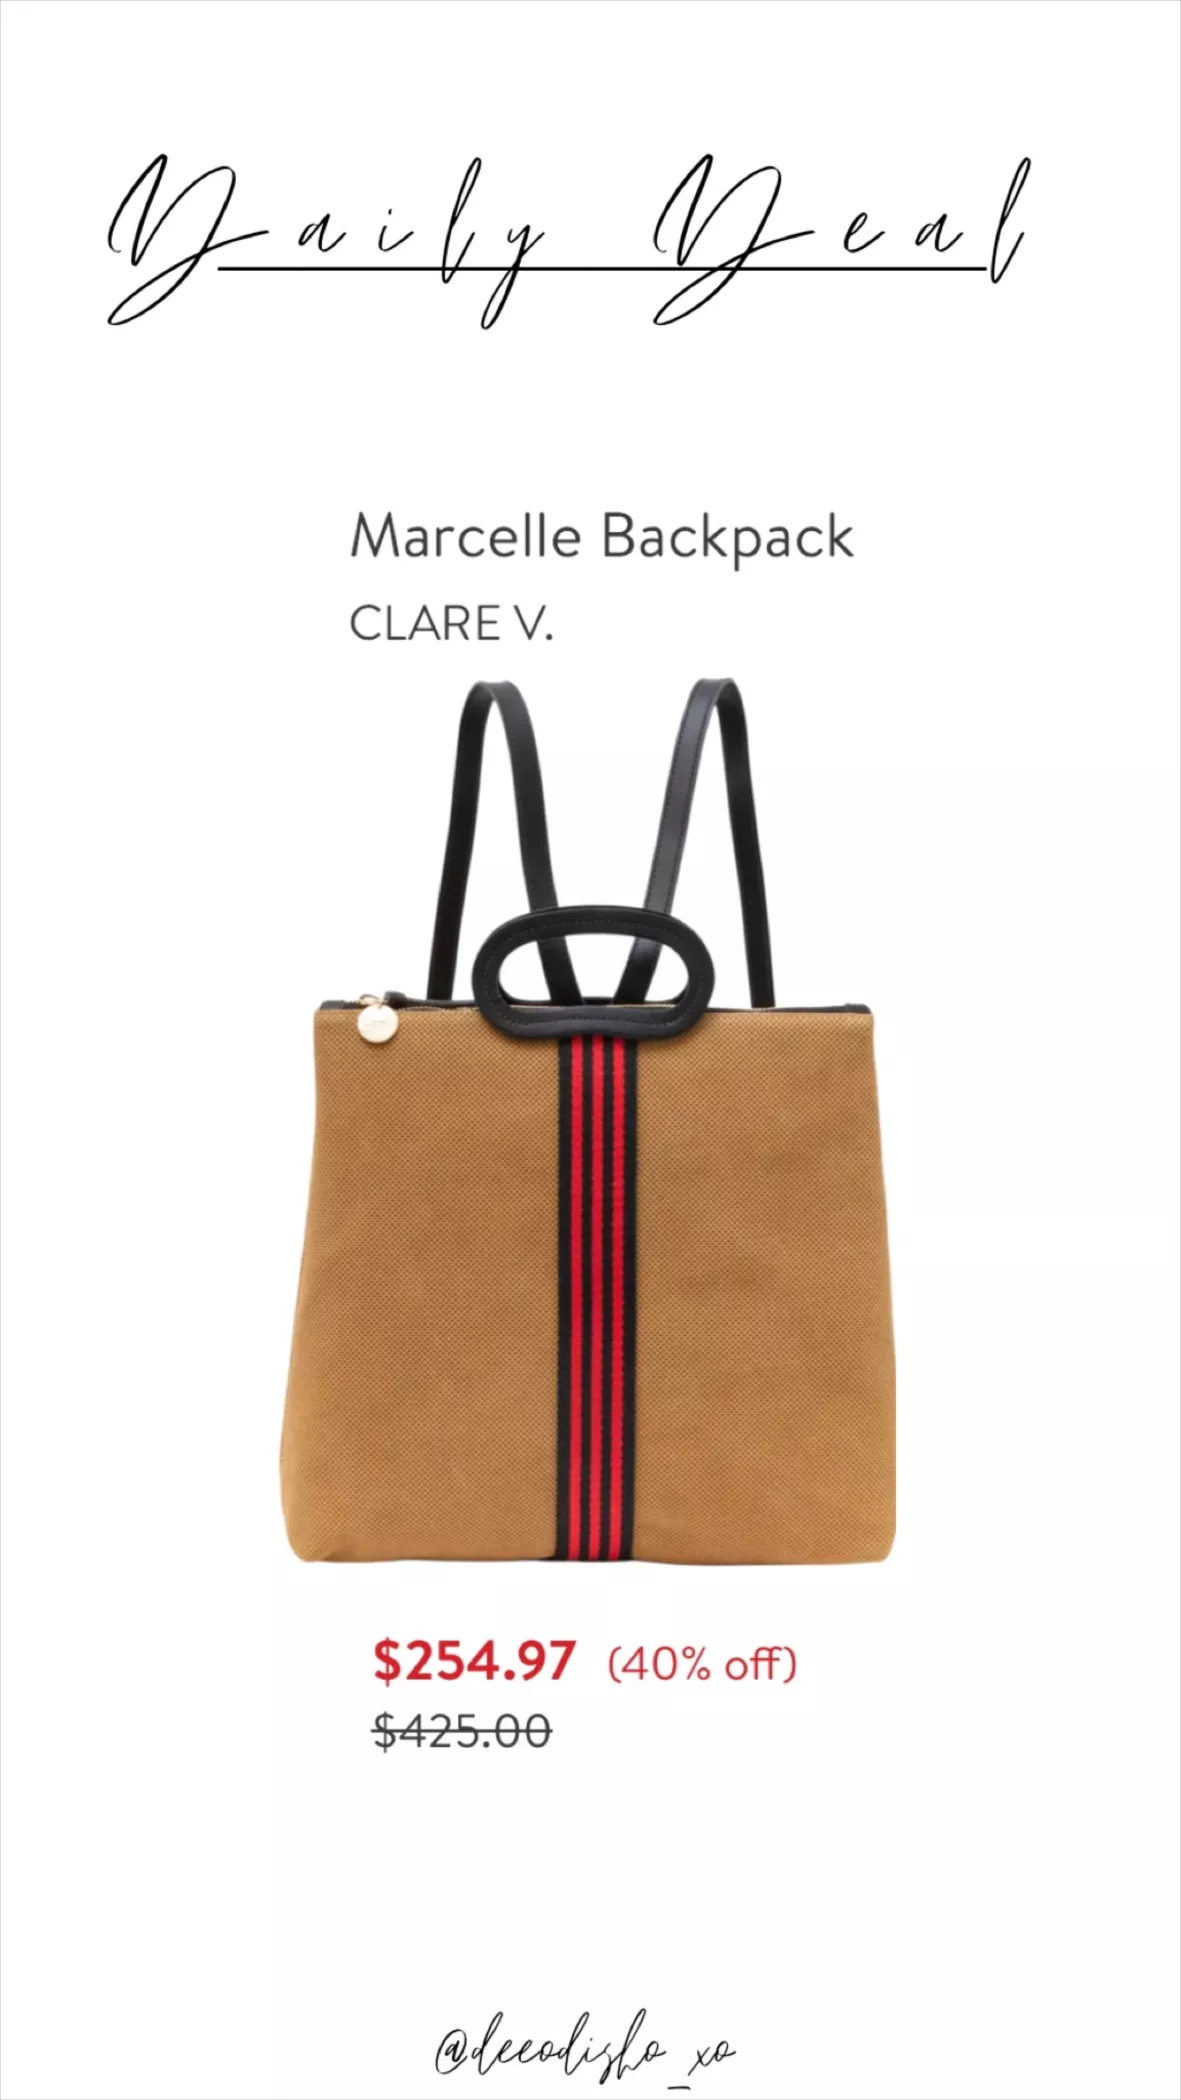 Clare V. Marcelle Backpack curated on LTK